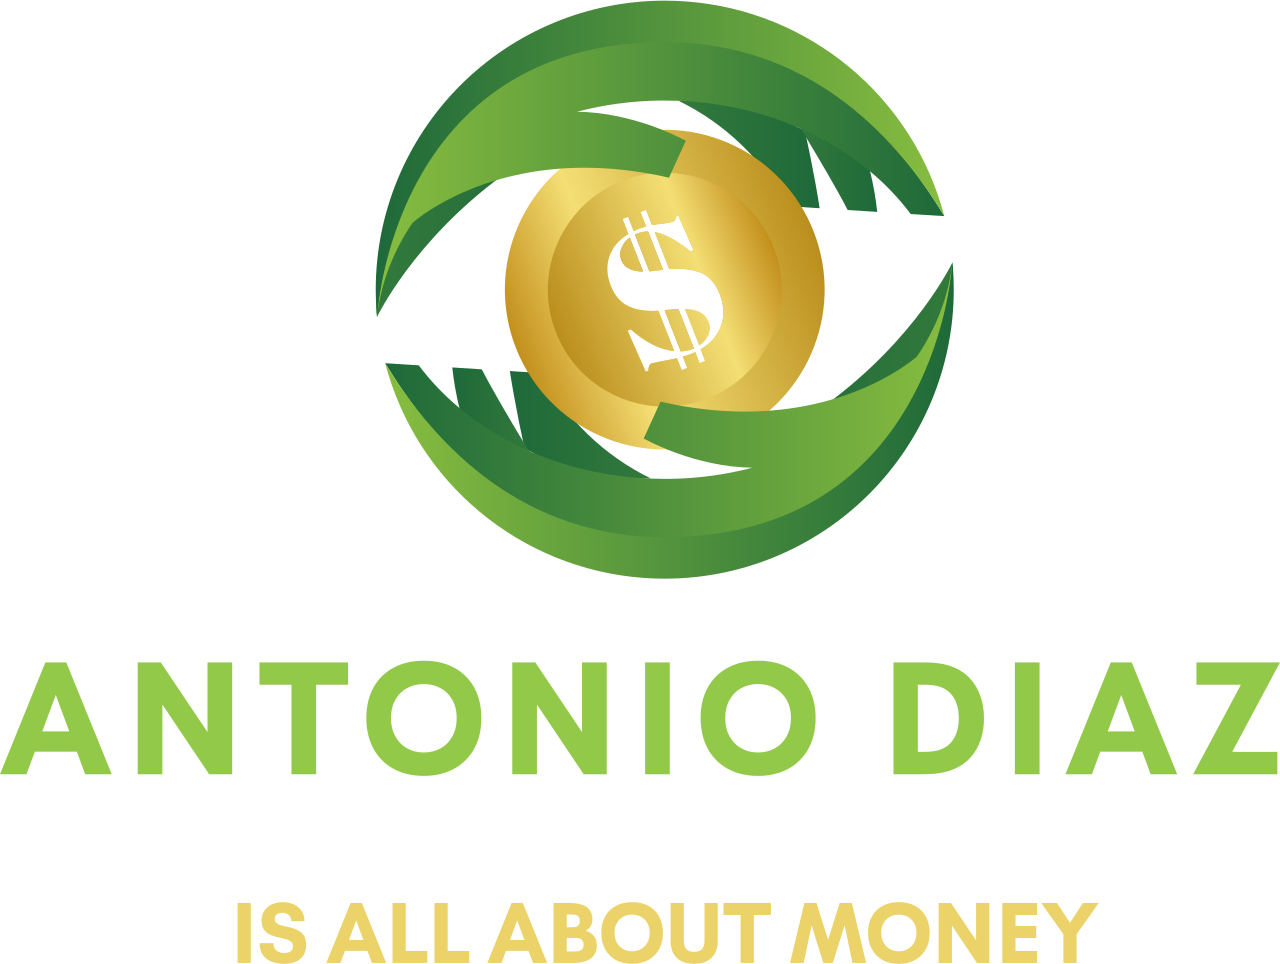 Antonio Diaz 's logo